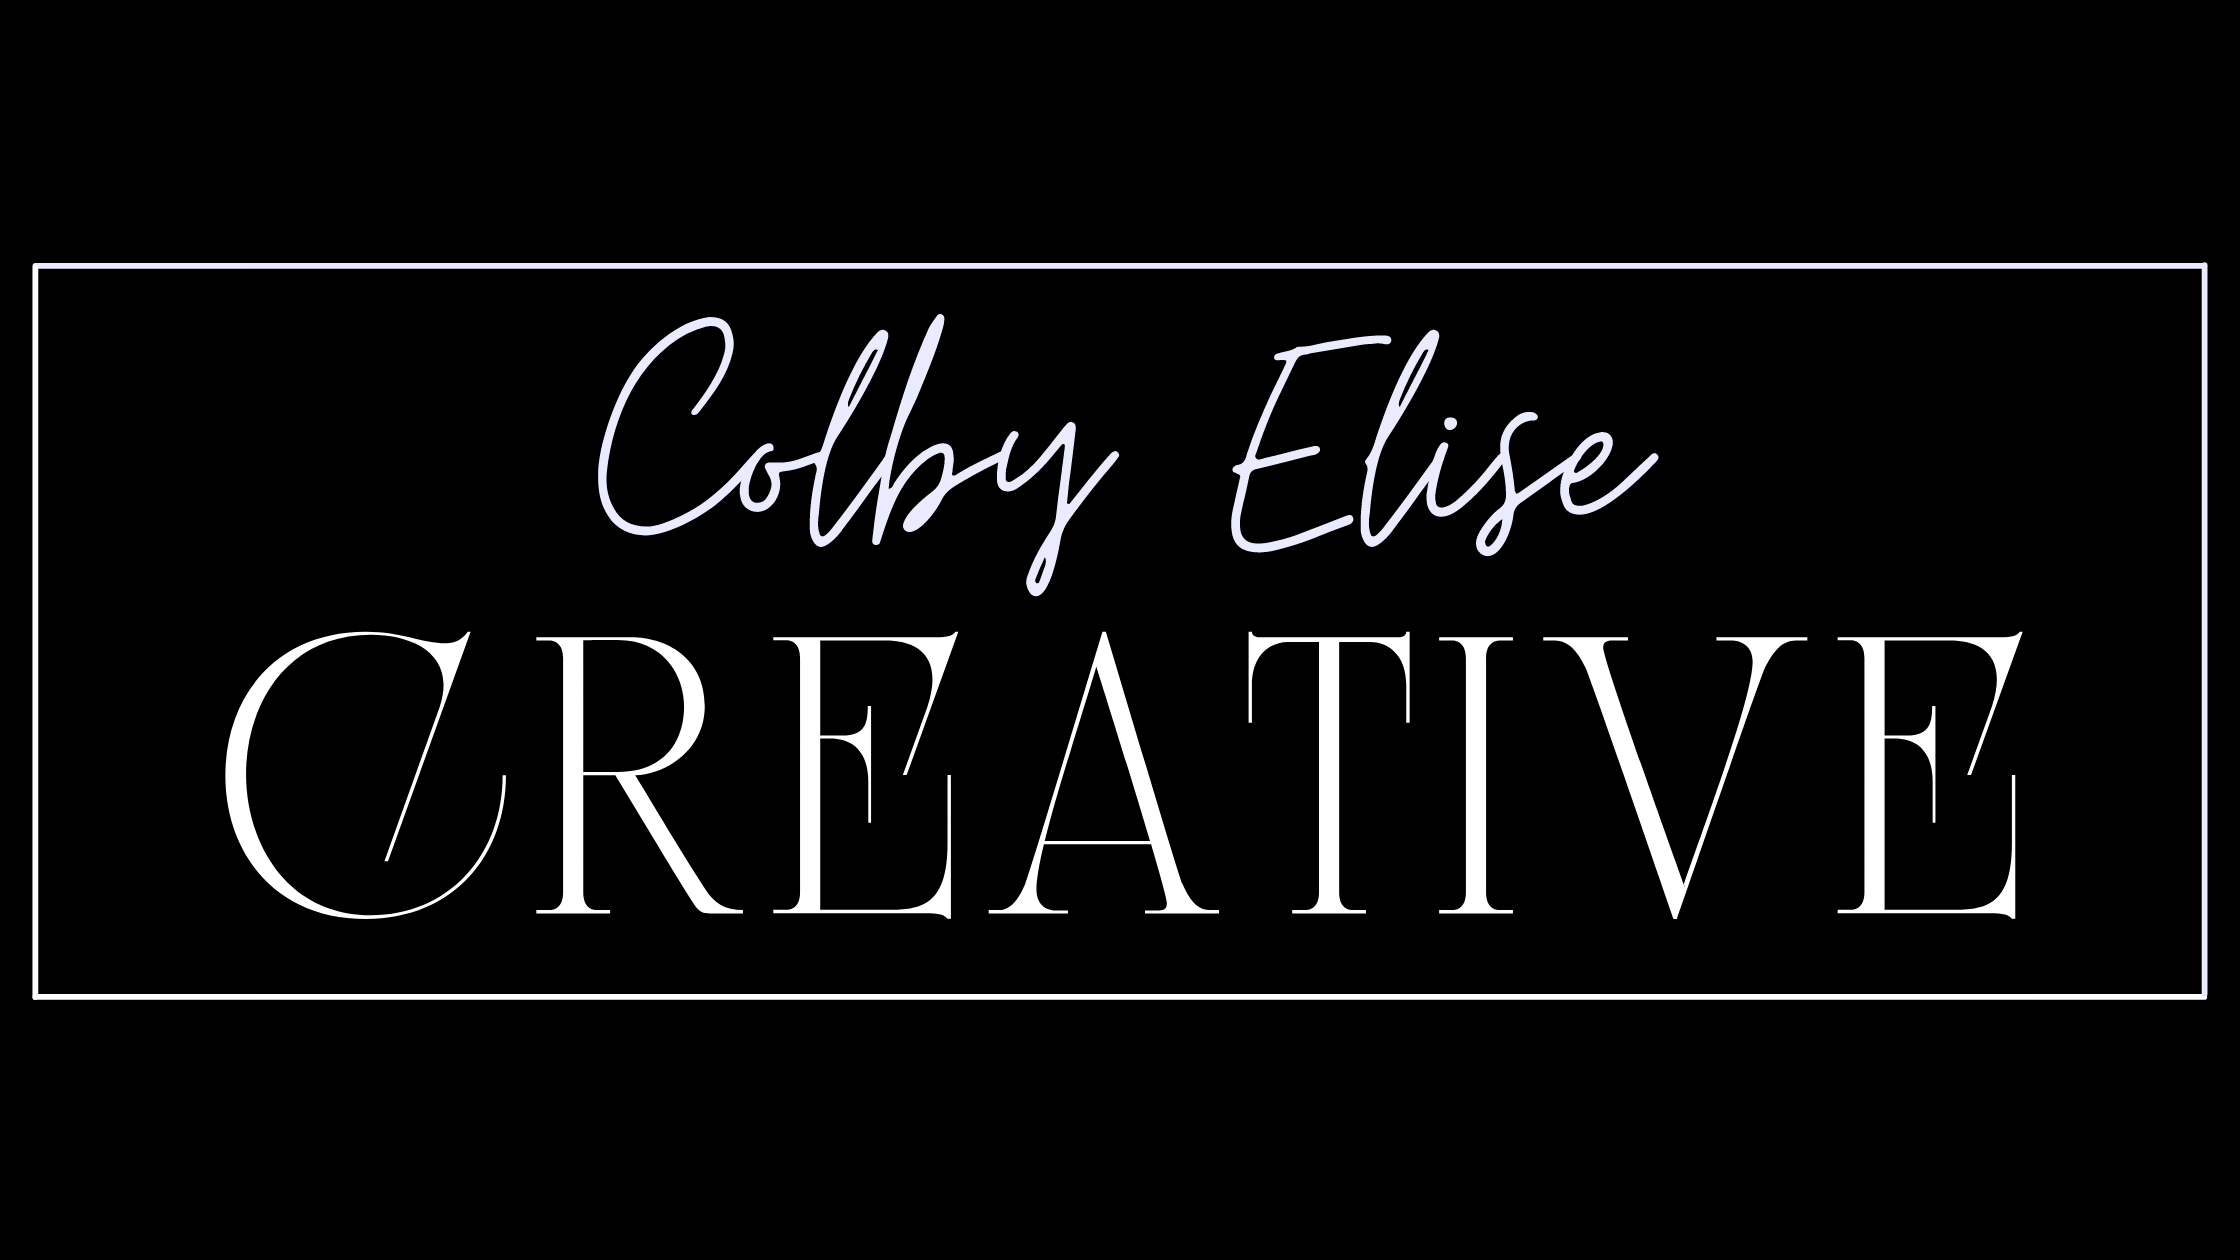 Colby Elise Creative